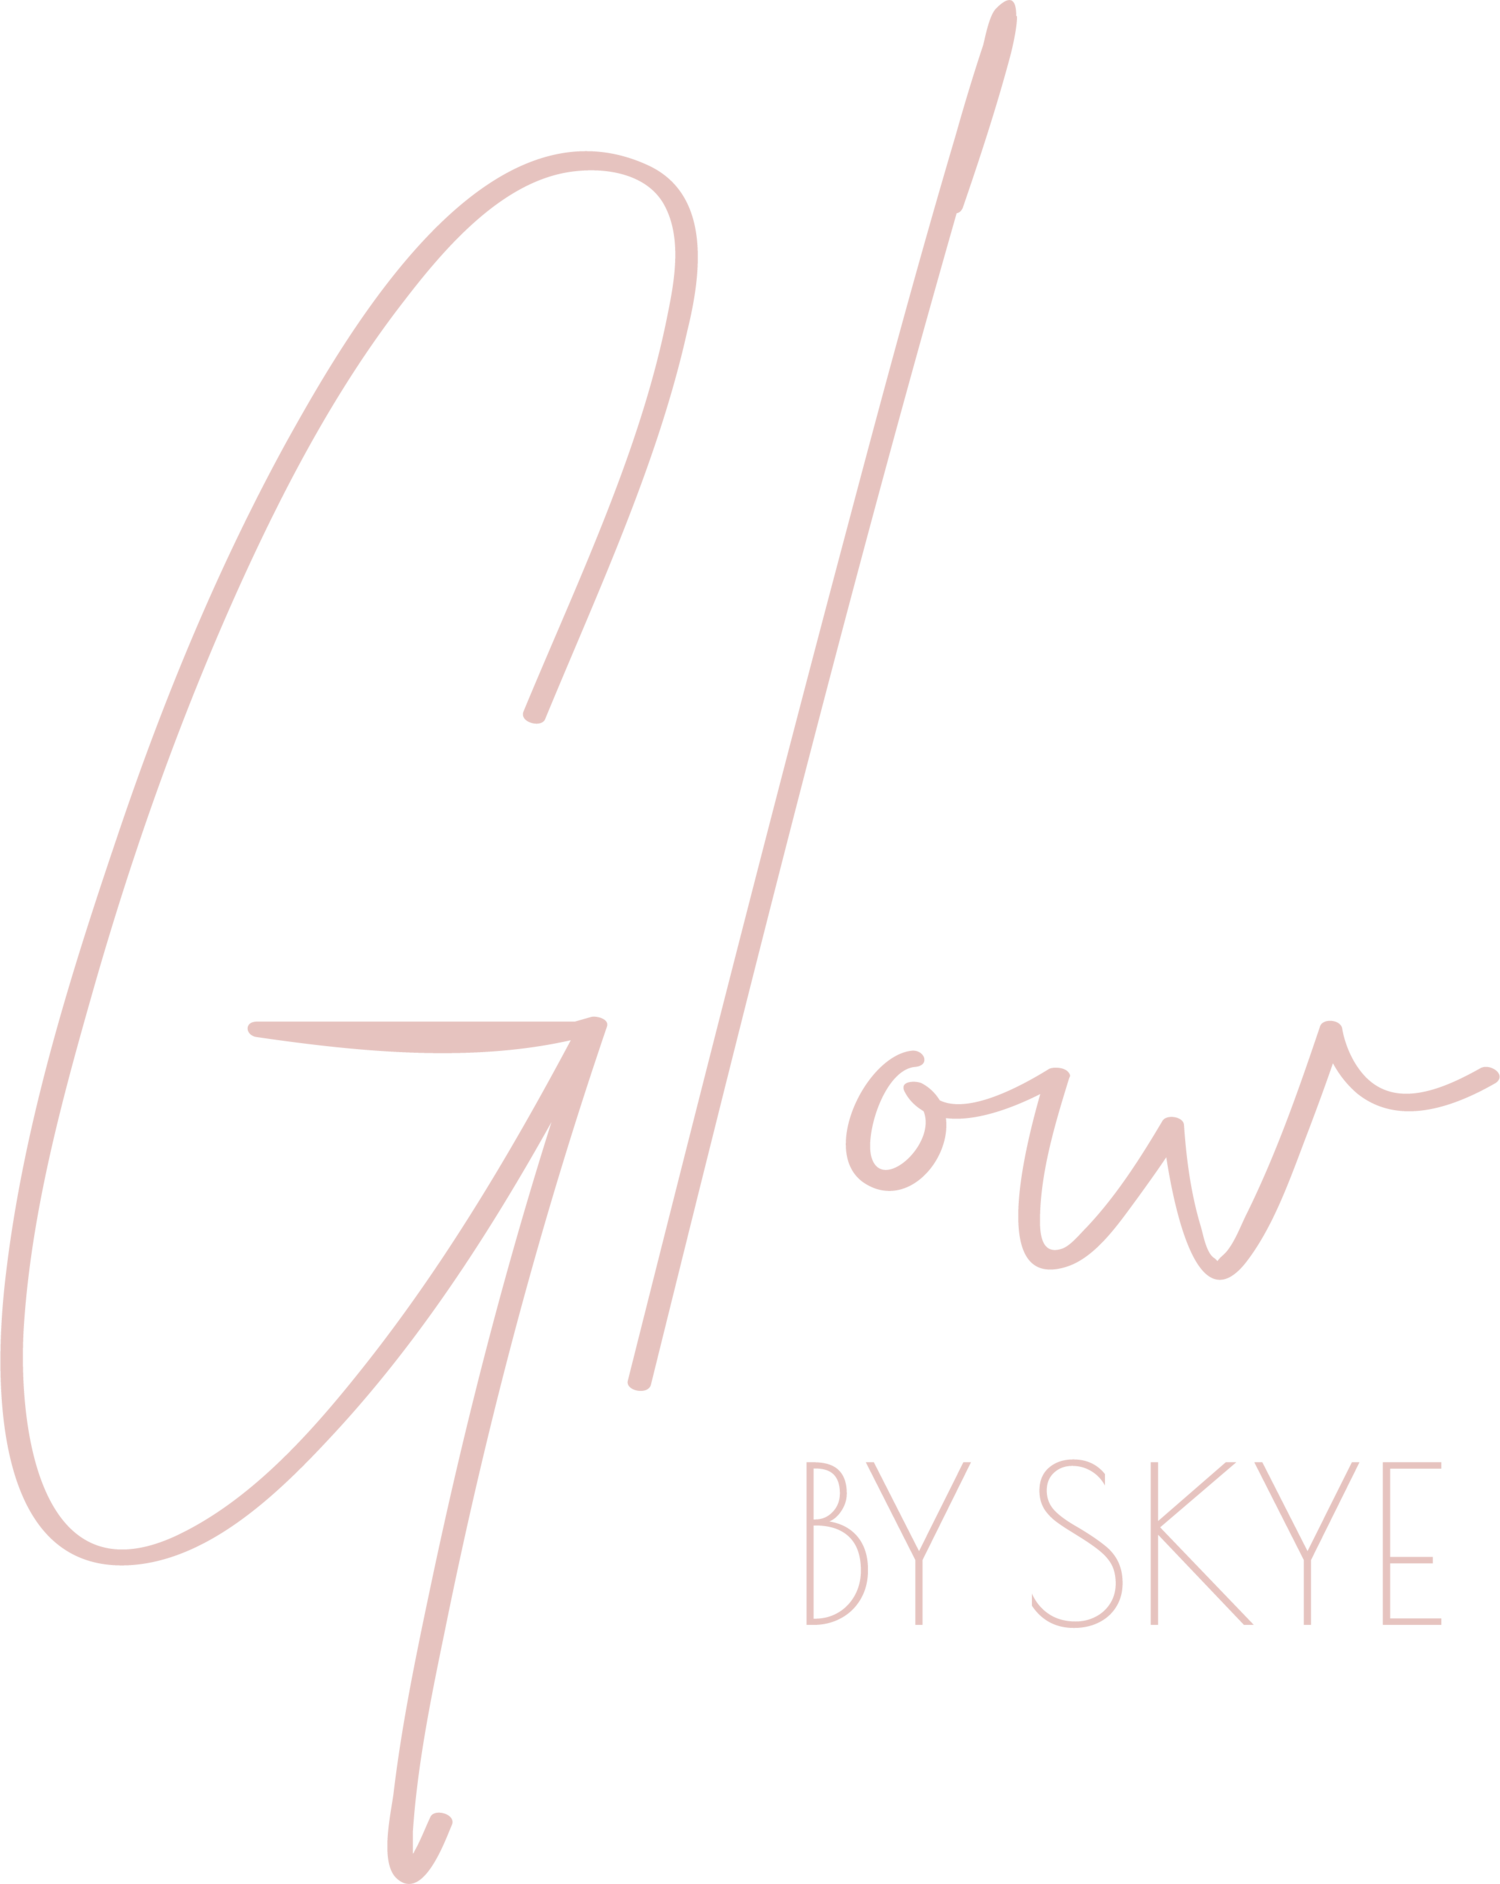 Glow by Skye